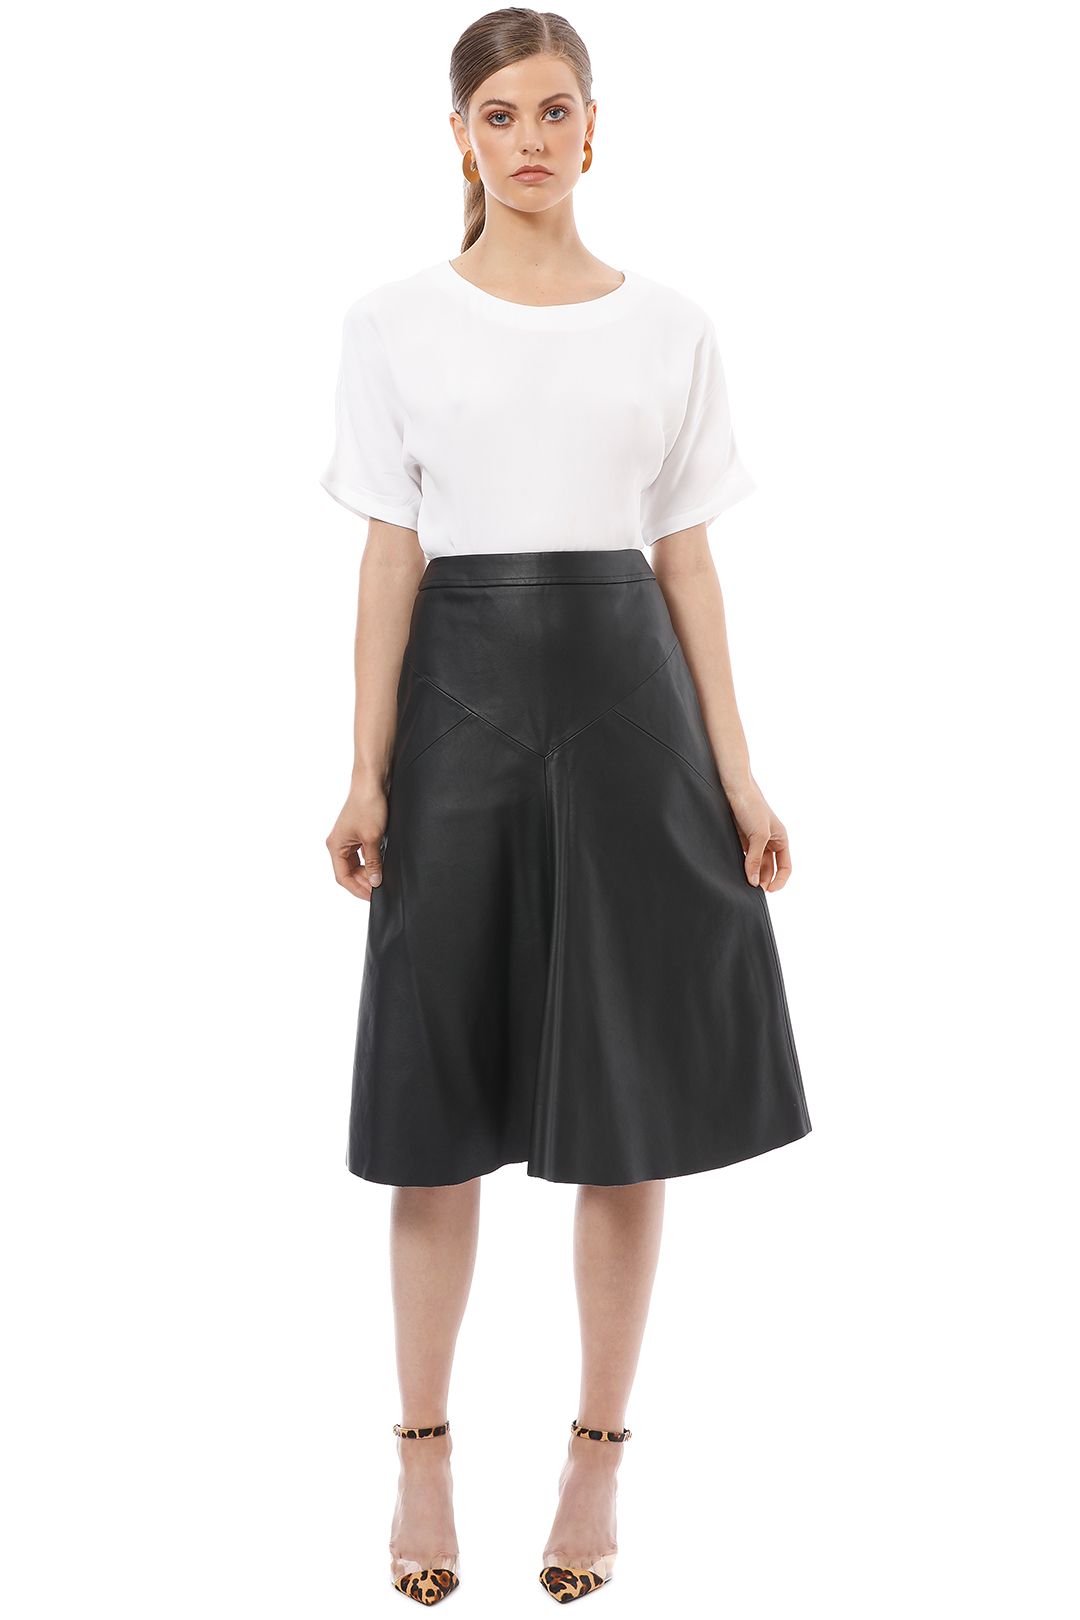 Saba - Ashley Midi Skirt - Black - Front